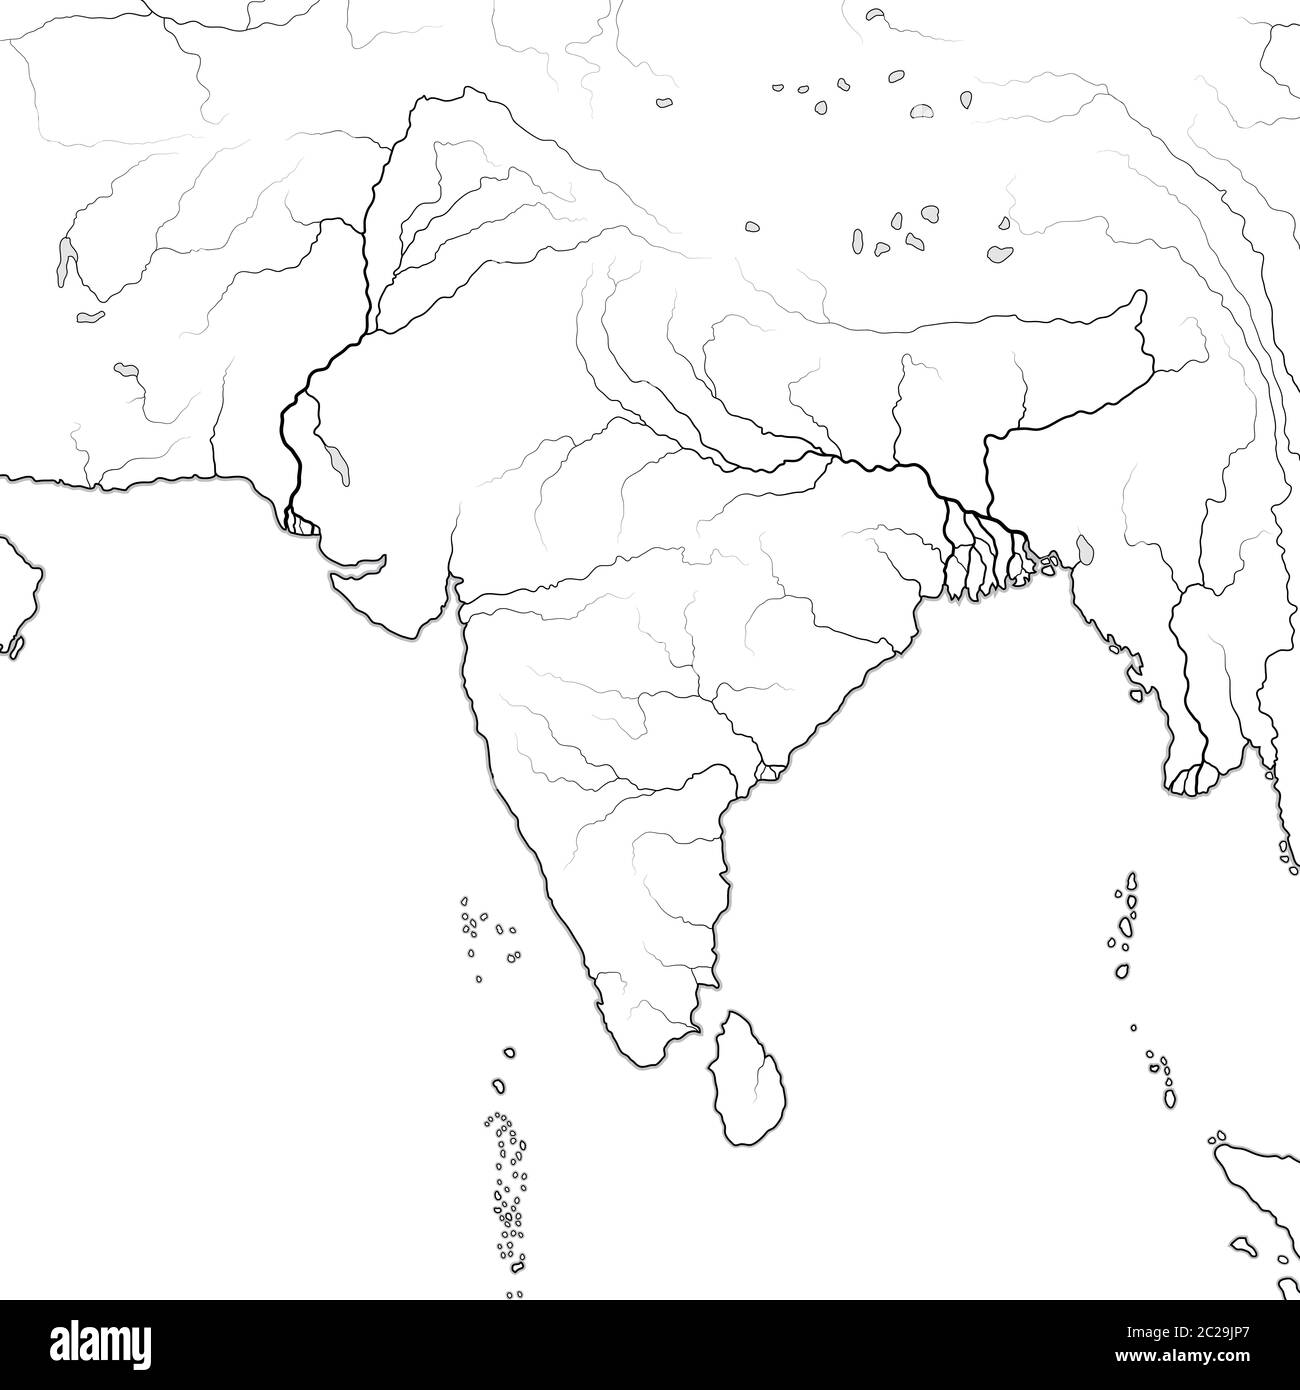 Mappa mondiale DEL SUBCONTINENTE INDIANO: India, Pakistan, Indù, Himalaya, Tibet, Bengala, Ceylon. Grafico geografico. Foto Stock